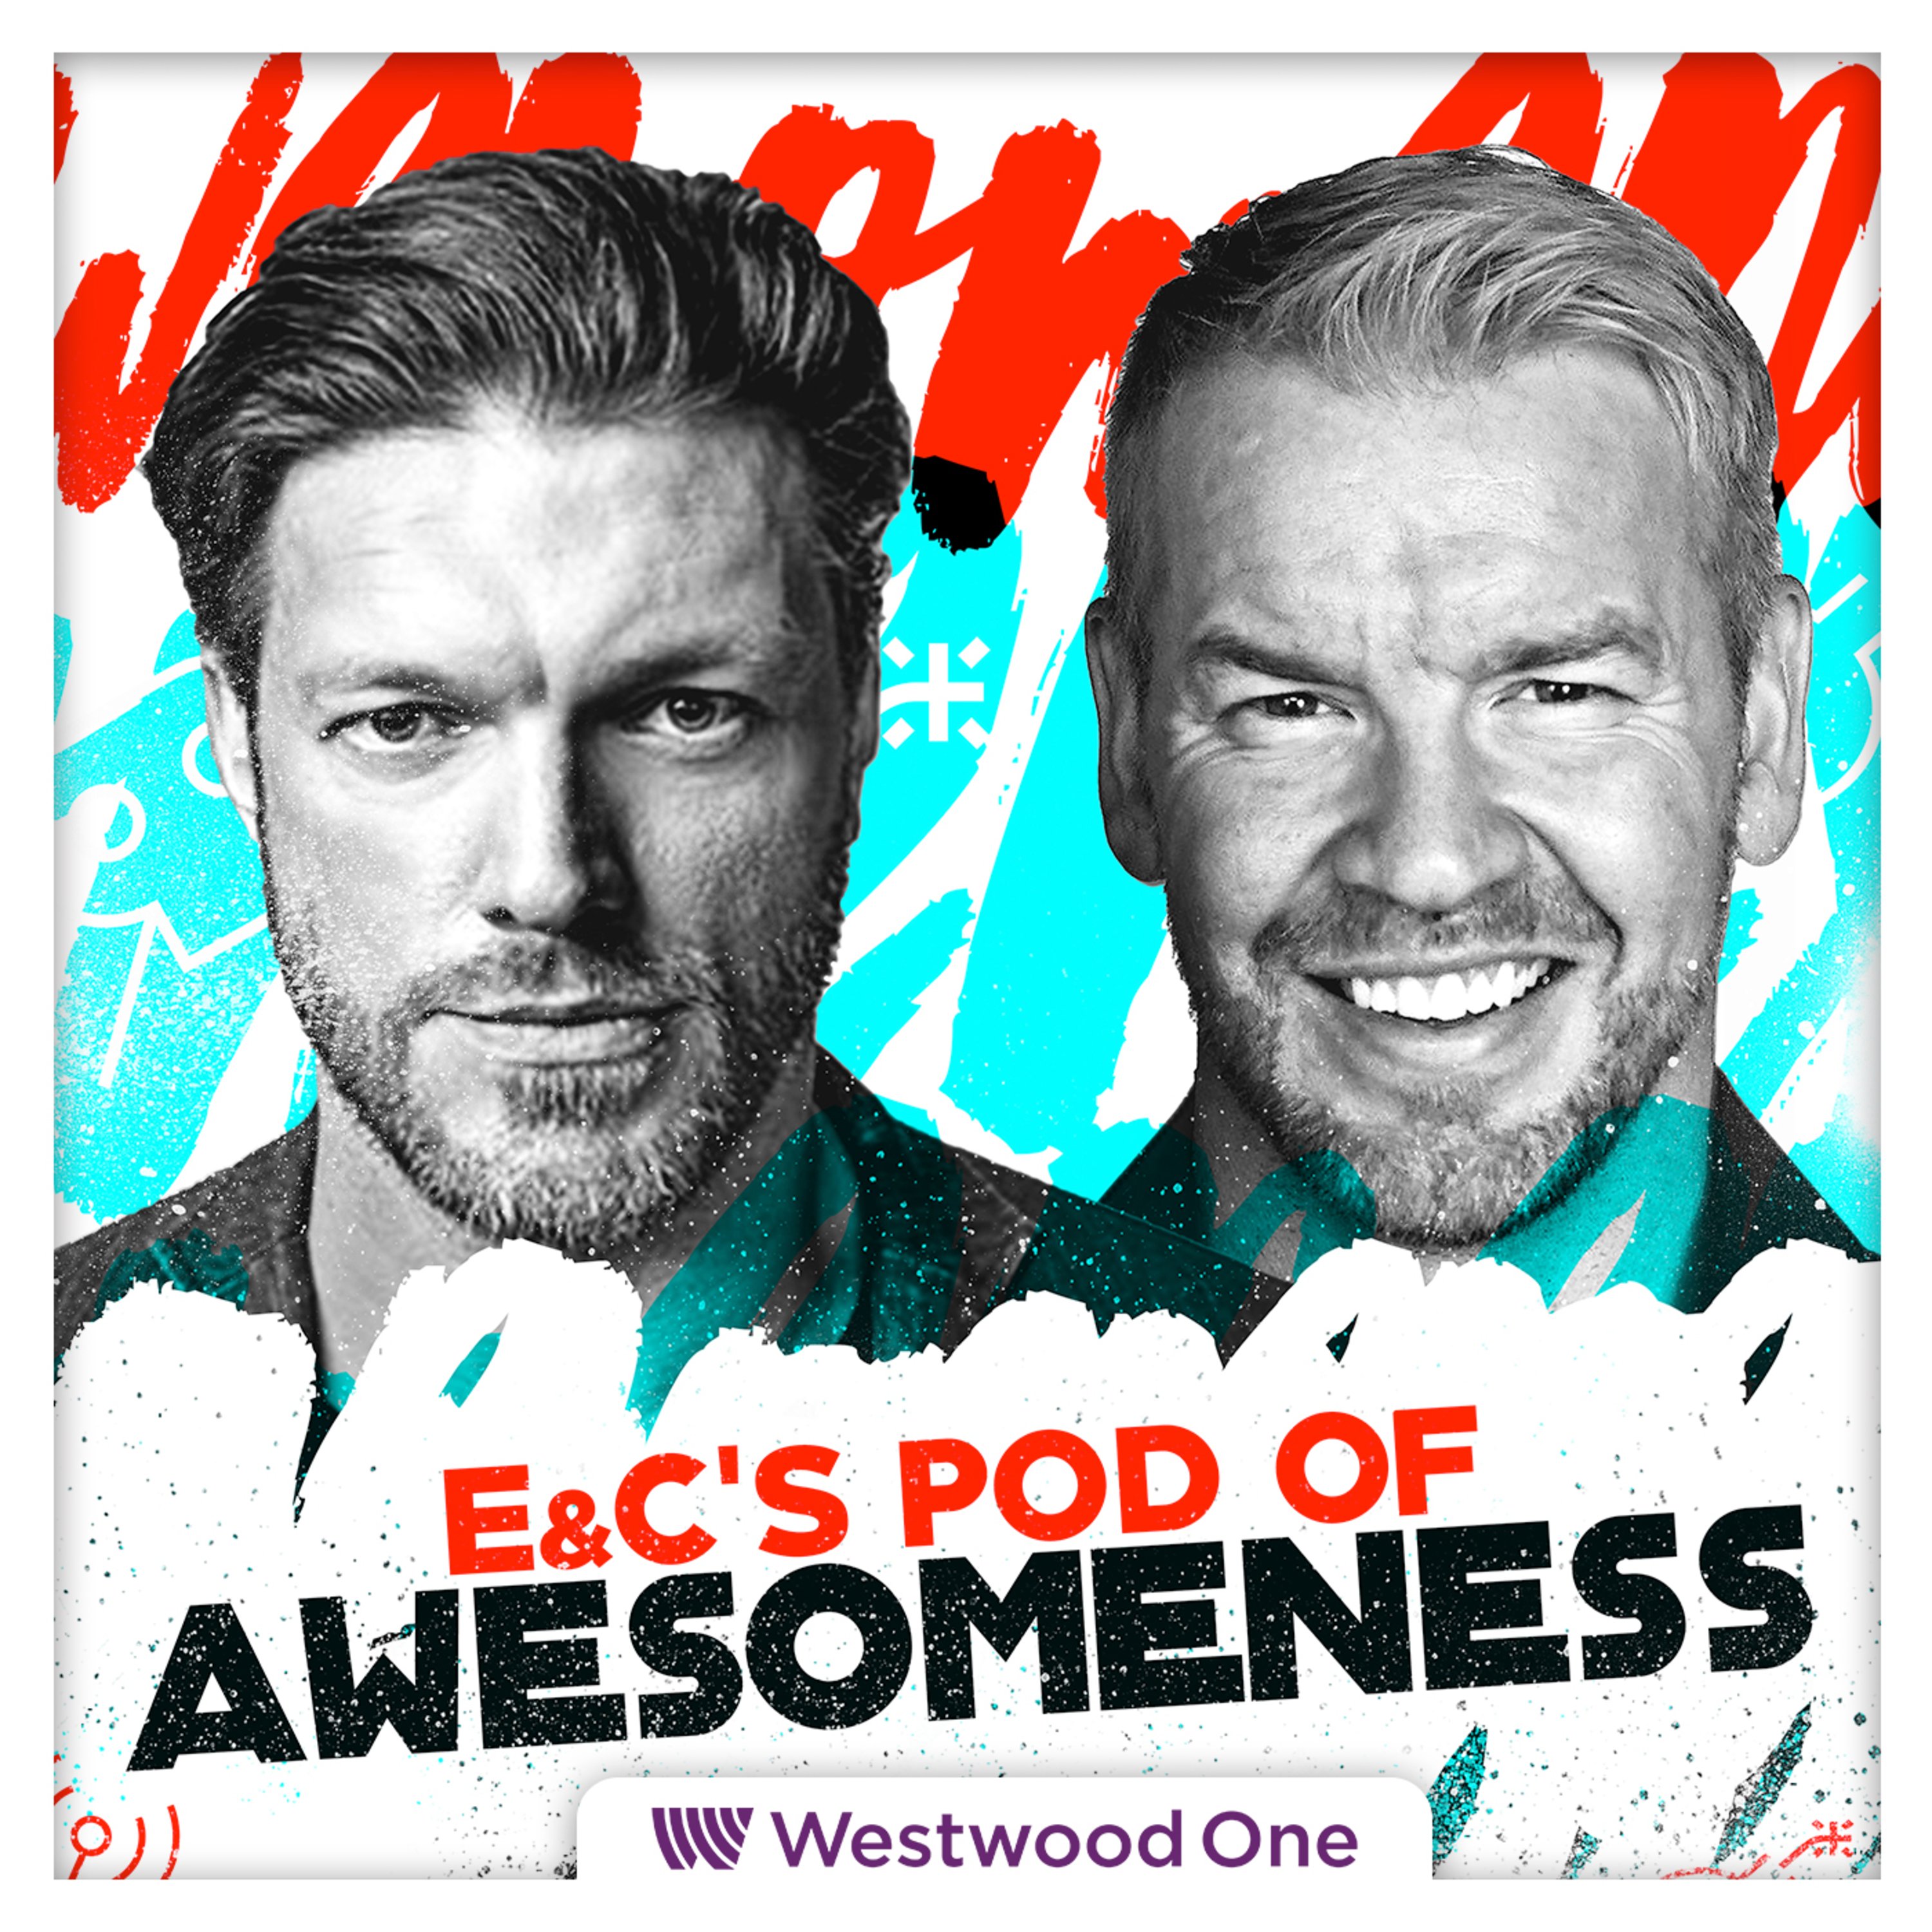 E&C’s Pod of Awesomeness